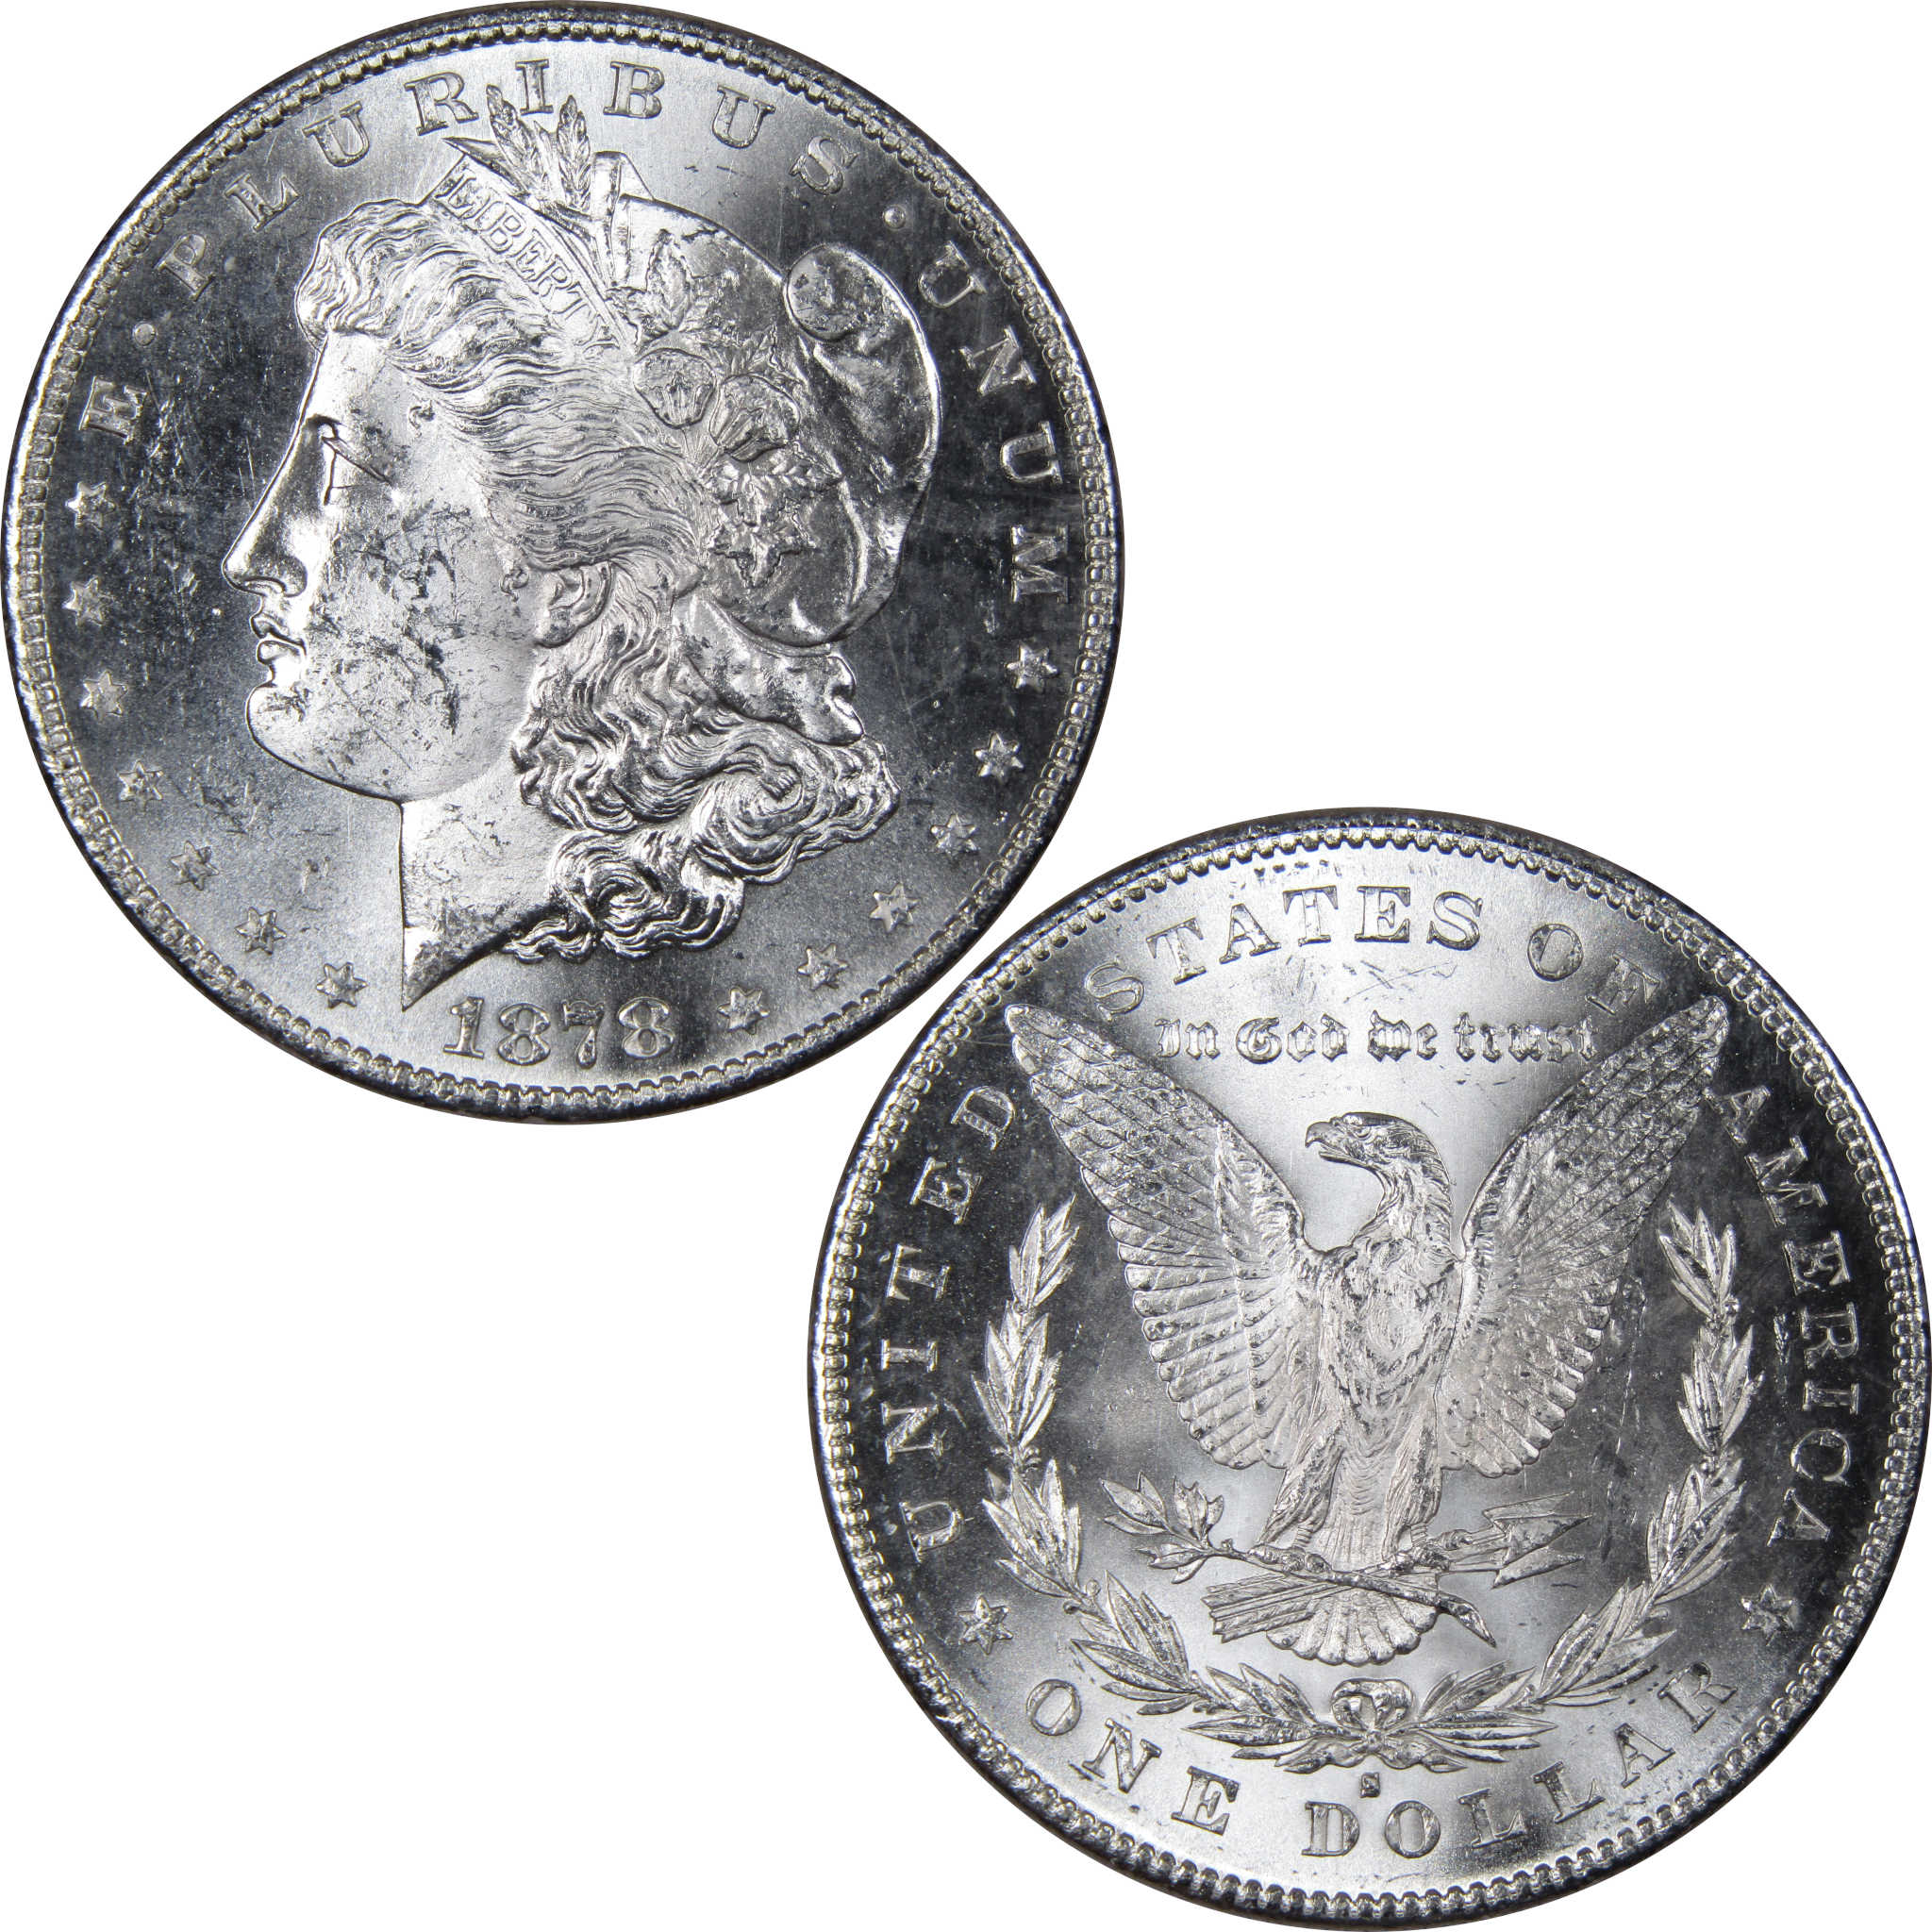 1878 S Morgan Dollar BU Uncirculated Mint State 90% Silver SKU:IPC8876 - Morgan coin - Morgan silver dollar - Morgan silver dollar for sale - Profile Coins &amp; Collectibles